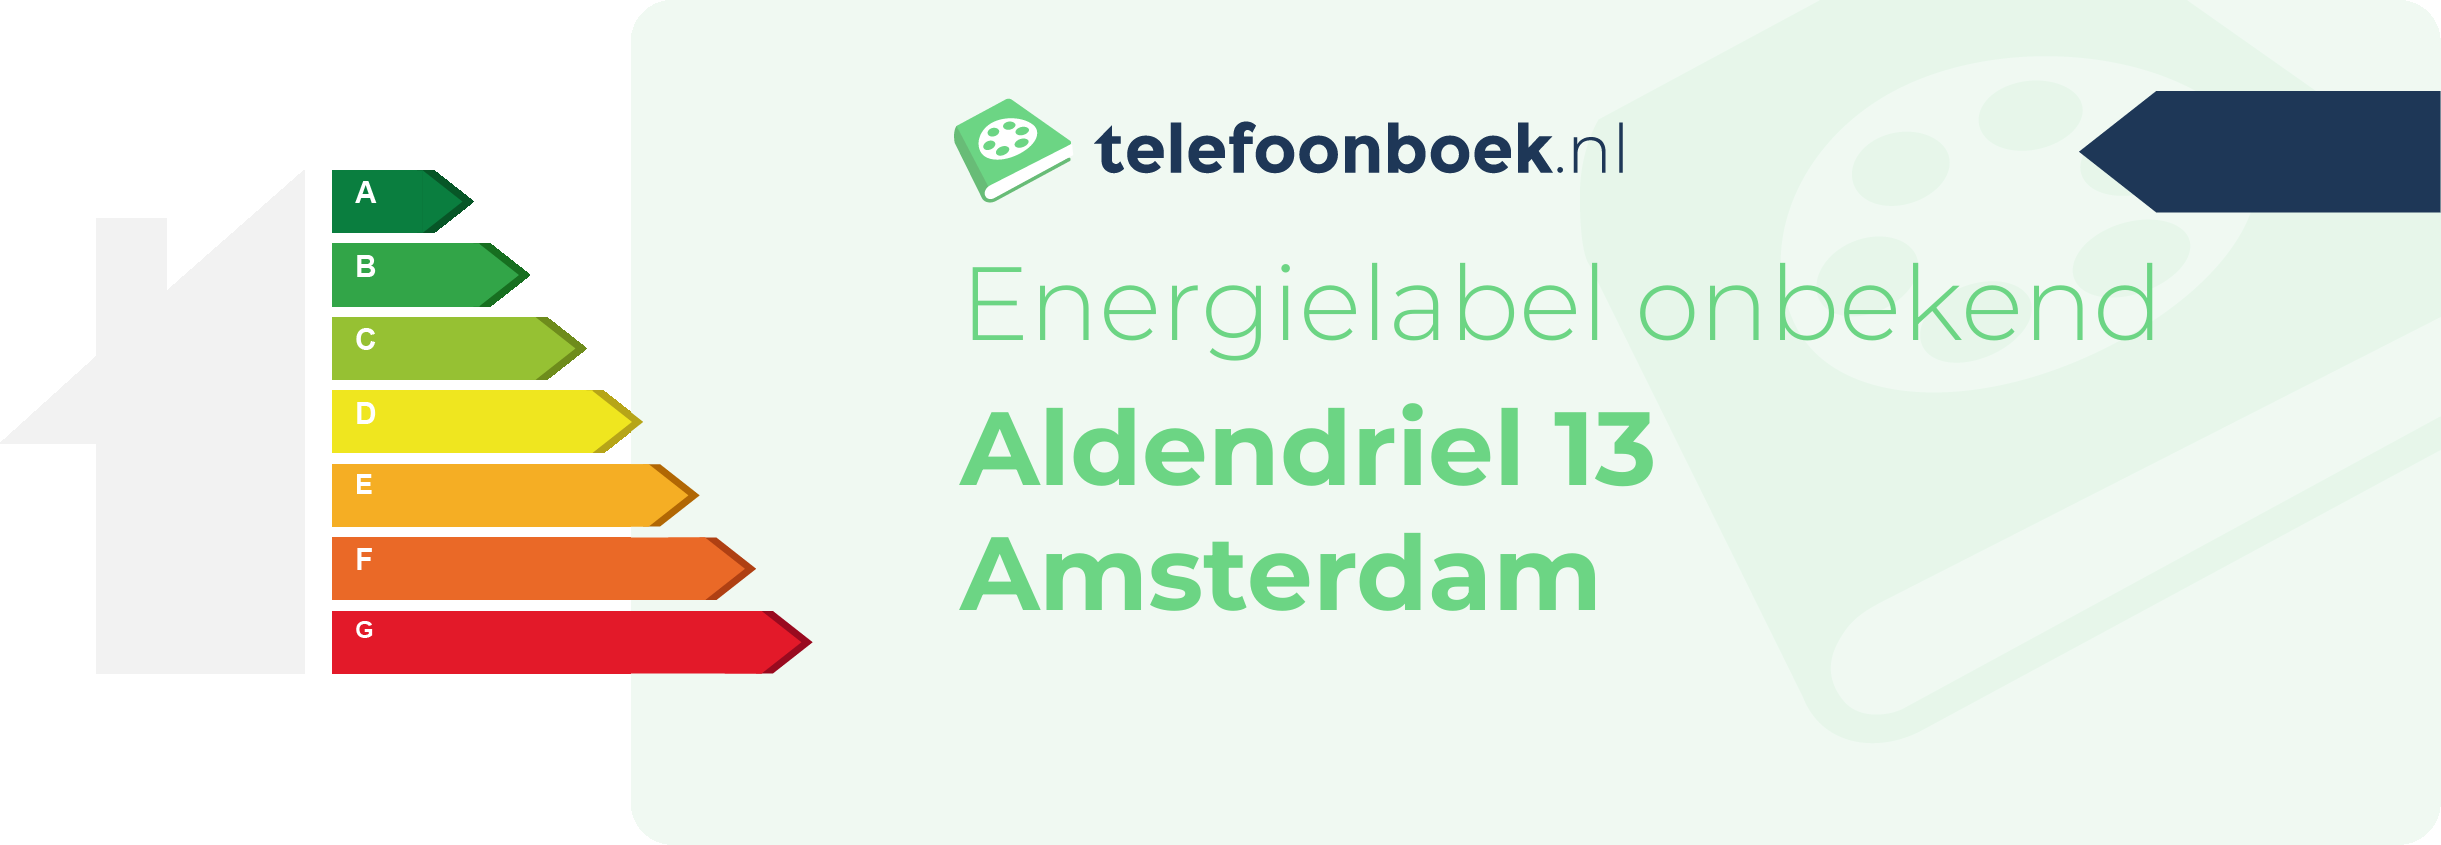 Energielabel Aldendriel 13 Amsterdam